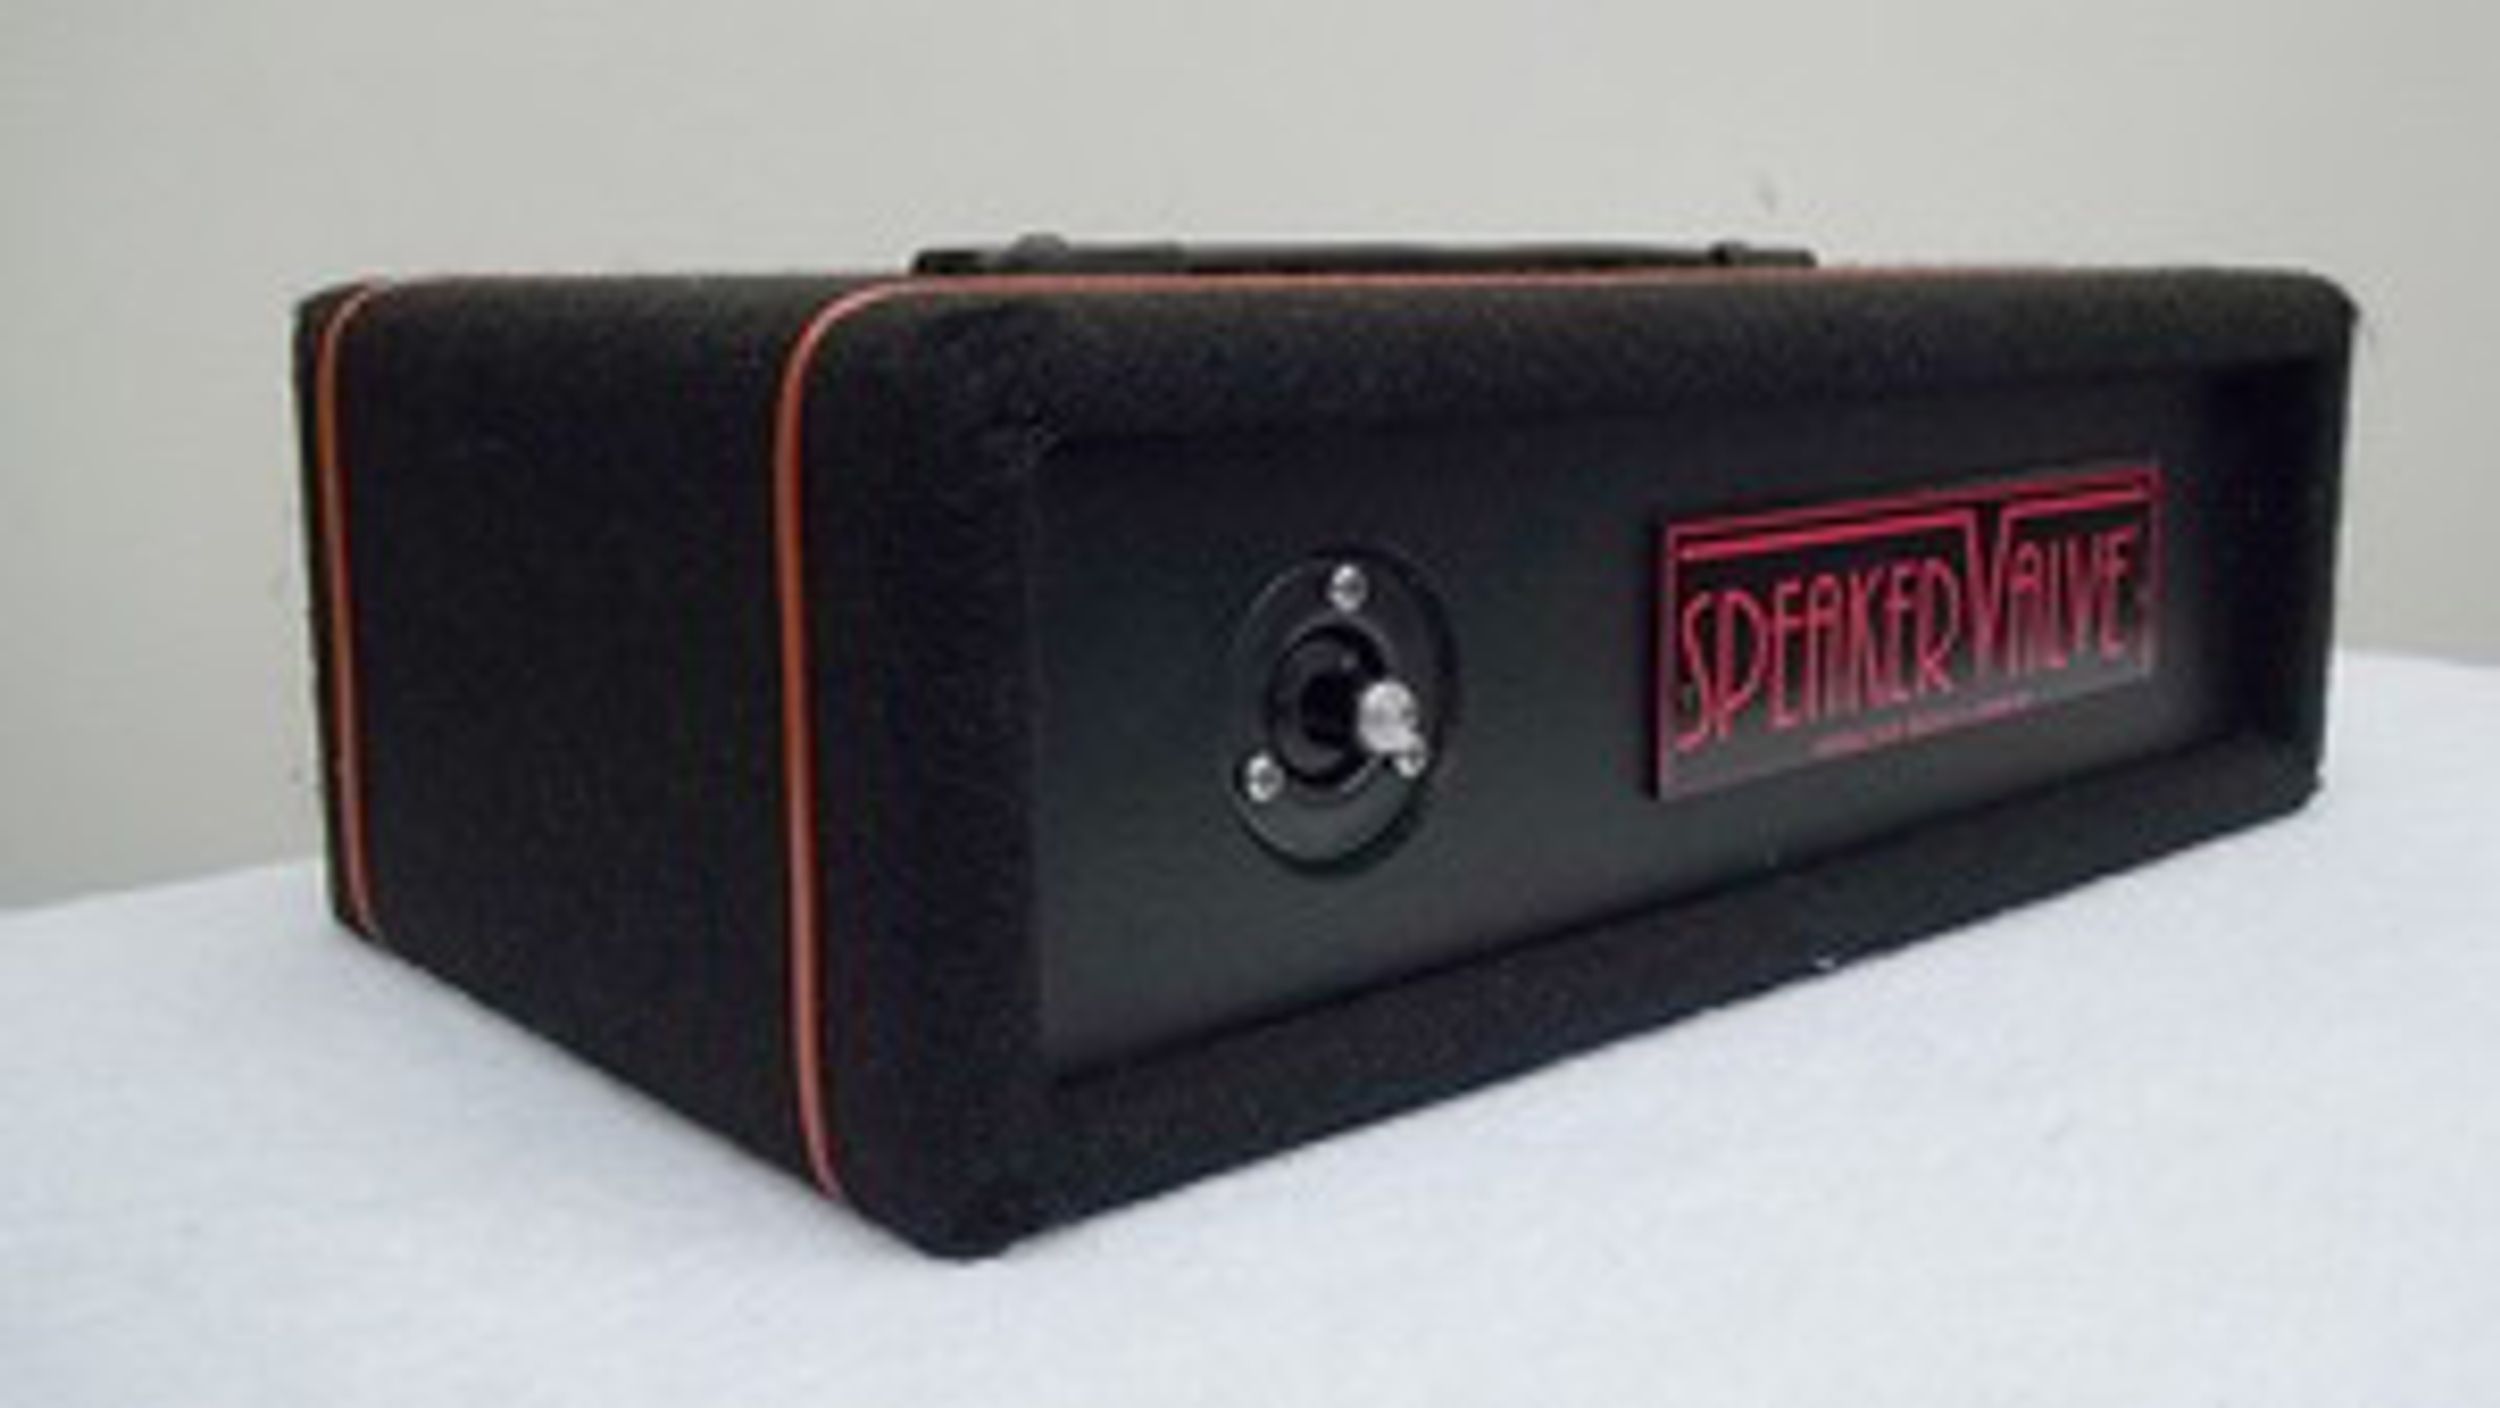 Sherlock Audio Canada Now Shipping SpeakerValve